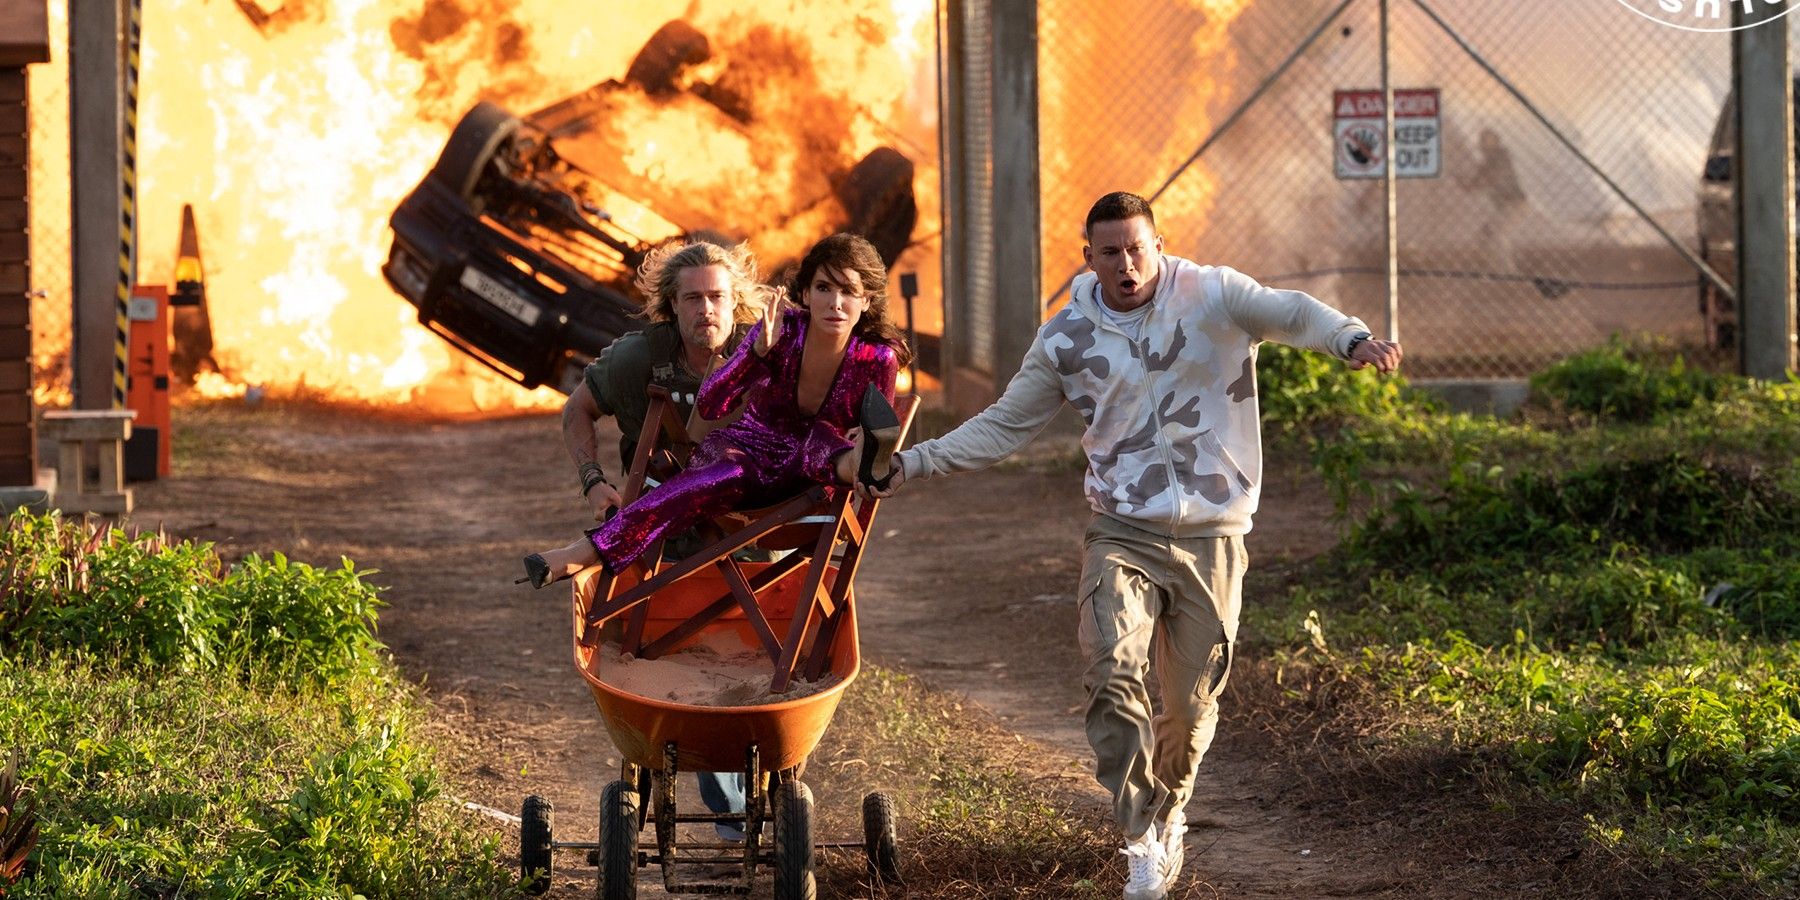 Brad Pitt,Sandra Bullock, & Channing Tatum run away from an explosion in The Lost City